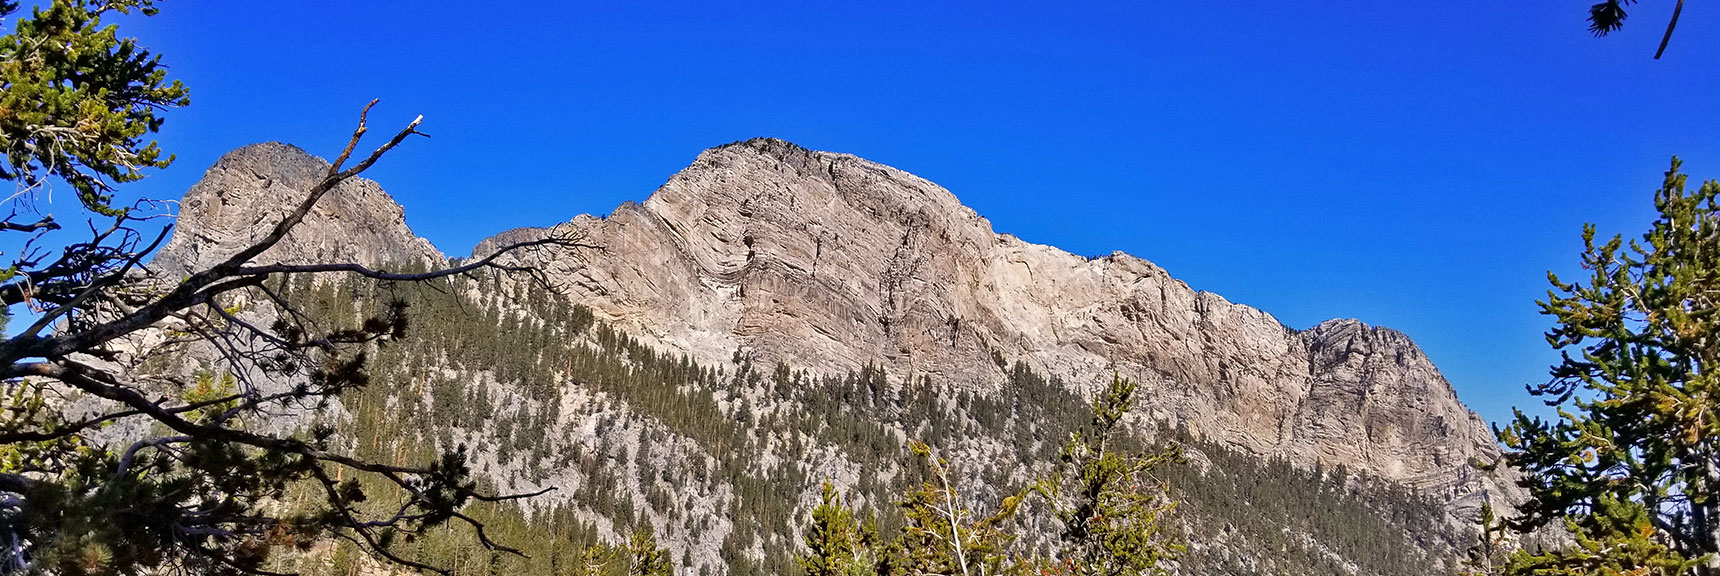 McFarland Peak Viewed from the Bonanza Trail | Bonanza Peak from Lee Canyon via the Lower Bristlecone Pine Trail and Bonanza Trail | Spring Mountains, Nevada